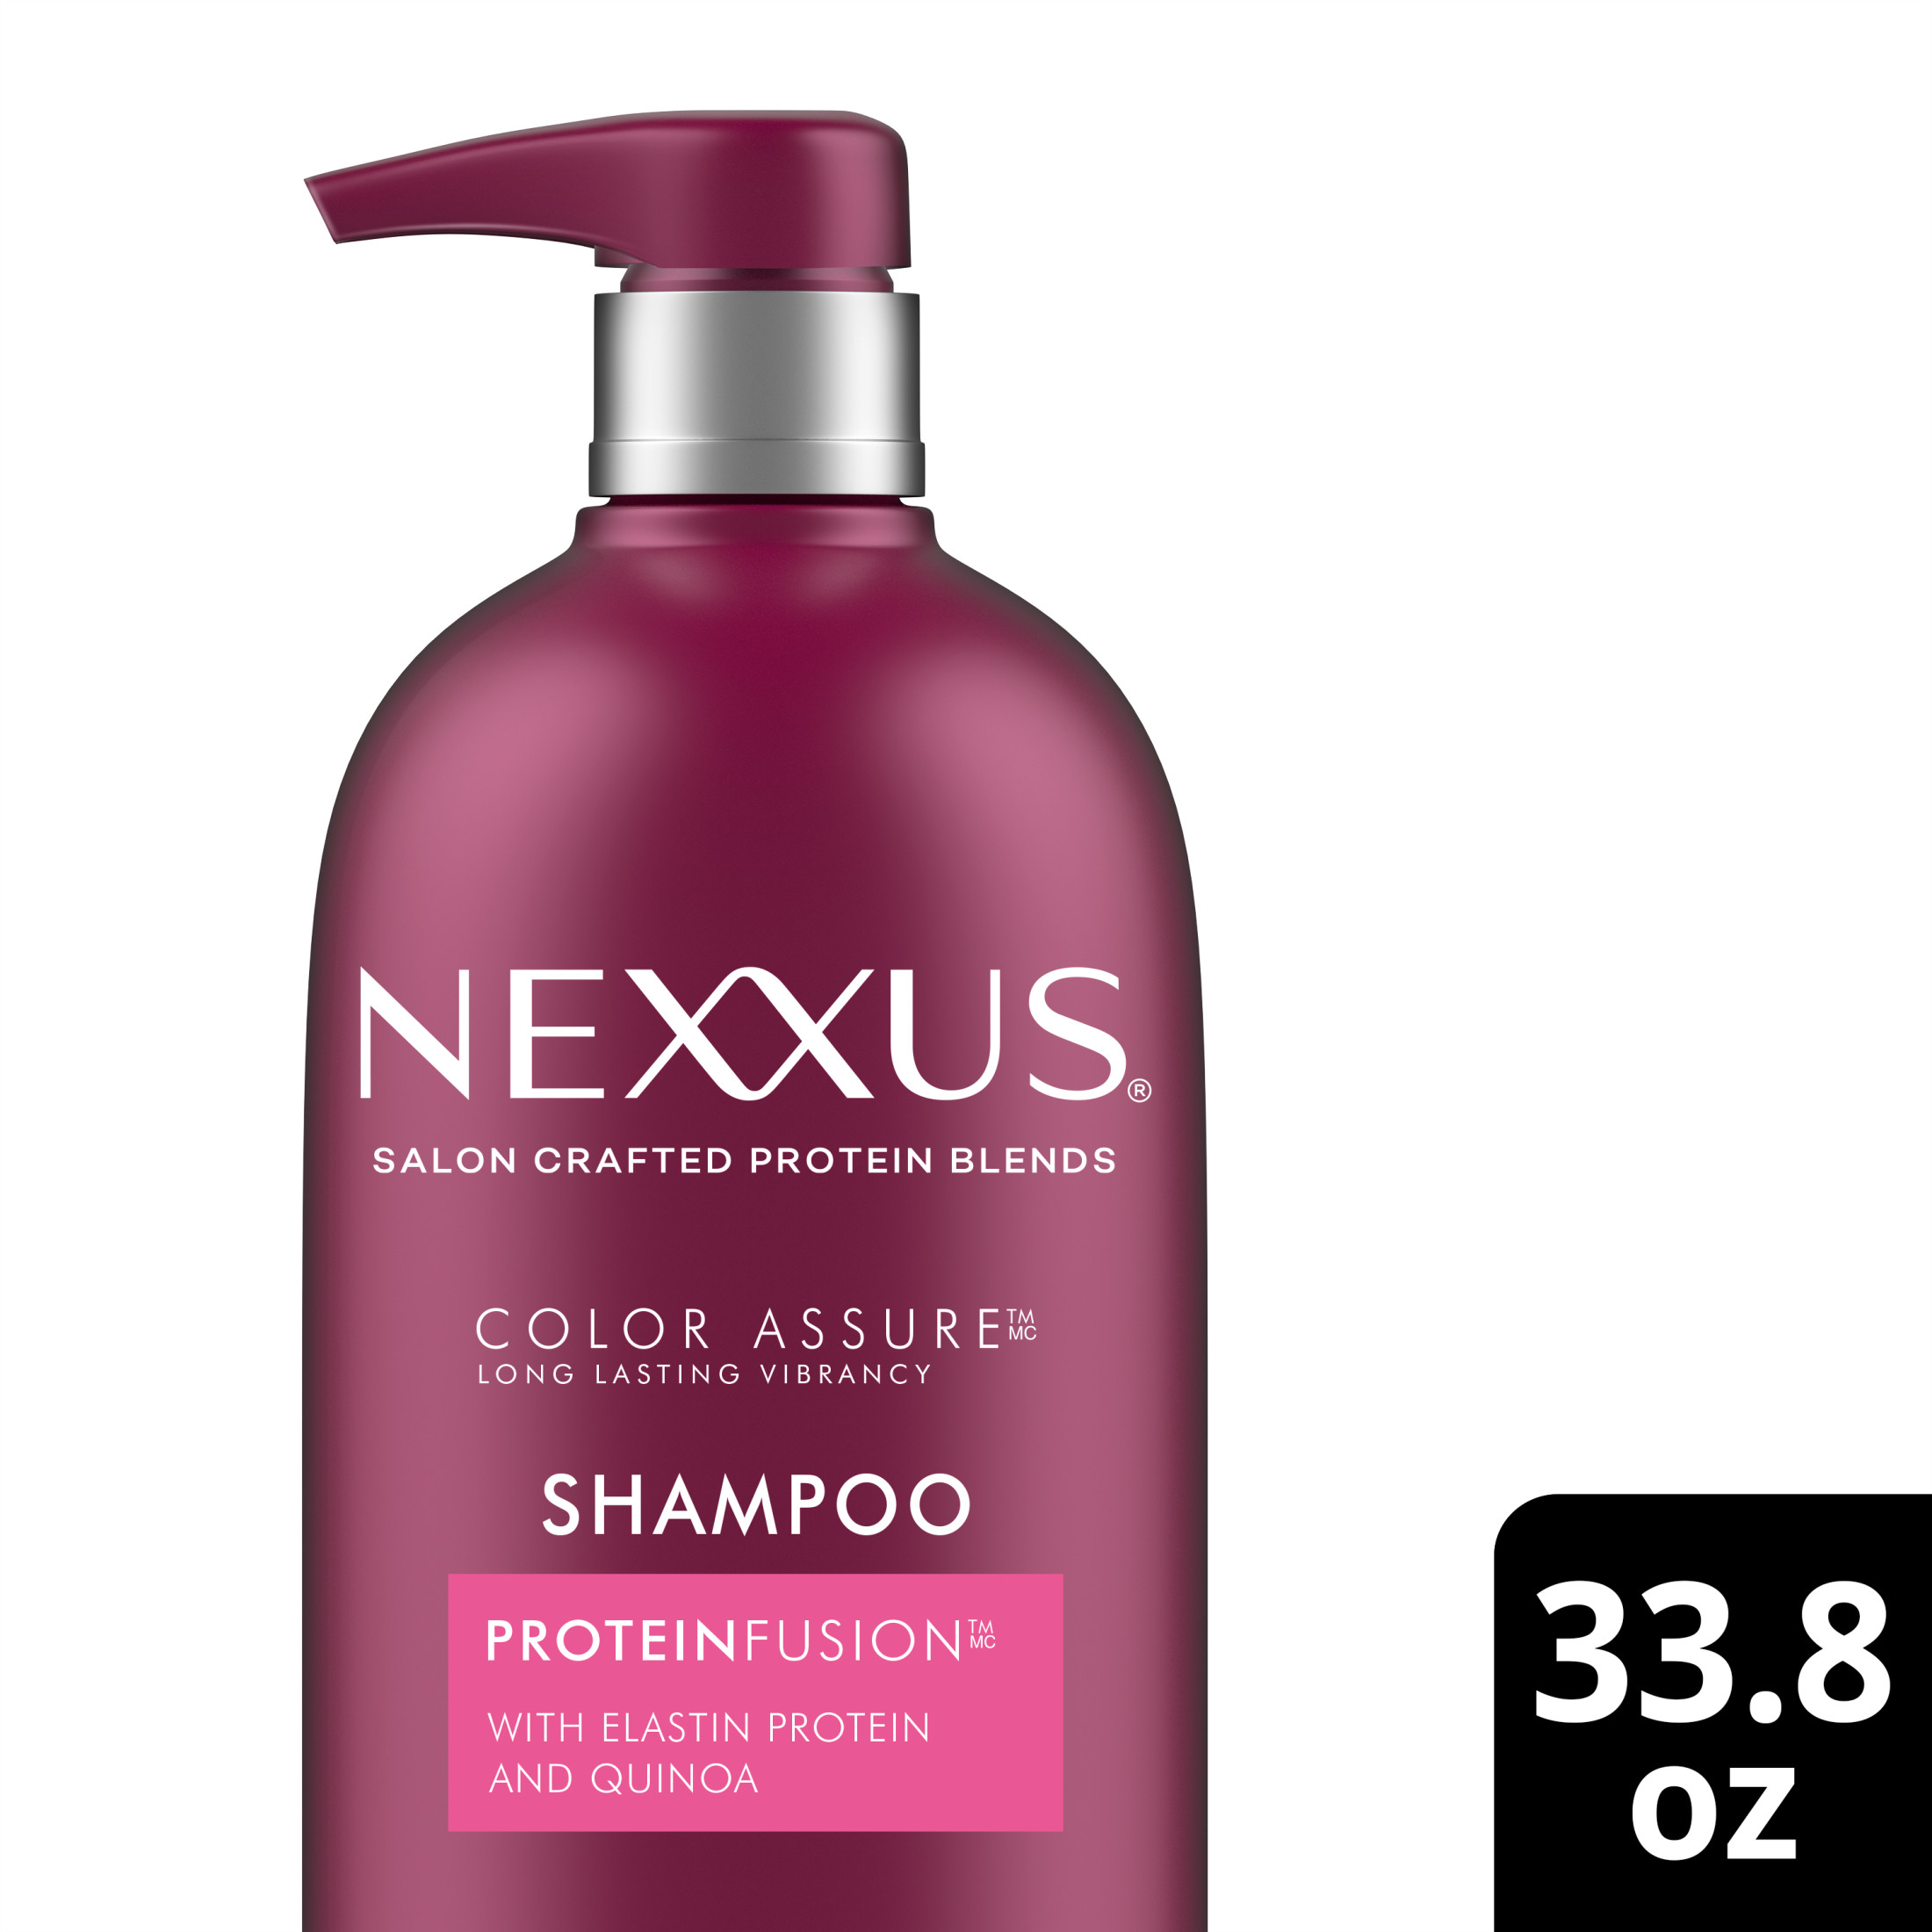 Nexxus Color Assure Long Lasting Vibrancy Protein Fusion Shampoo 33.8 fl oz - image 3 of 12